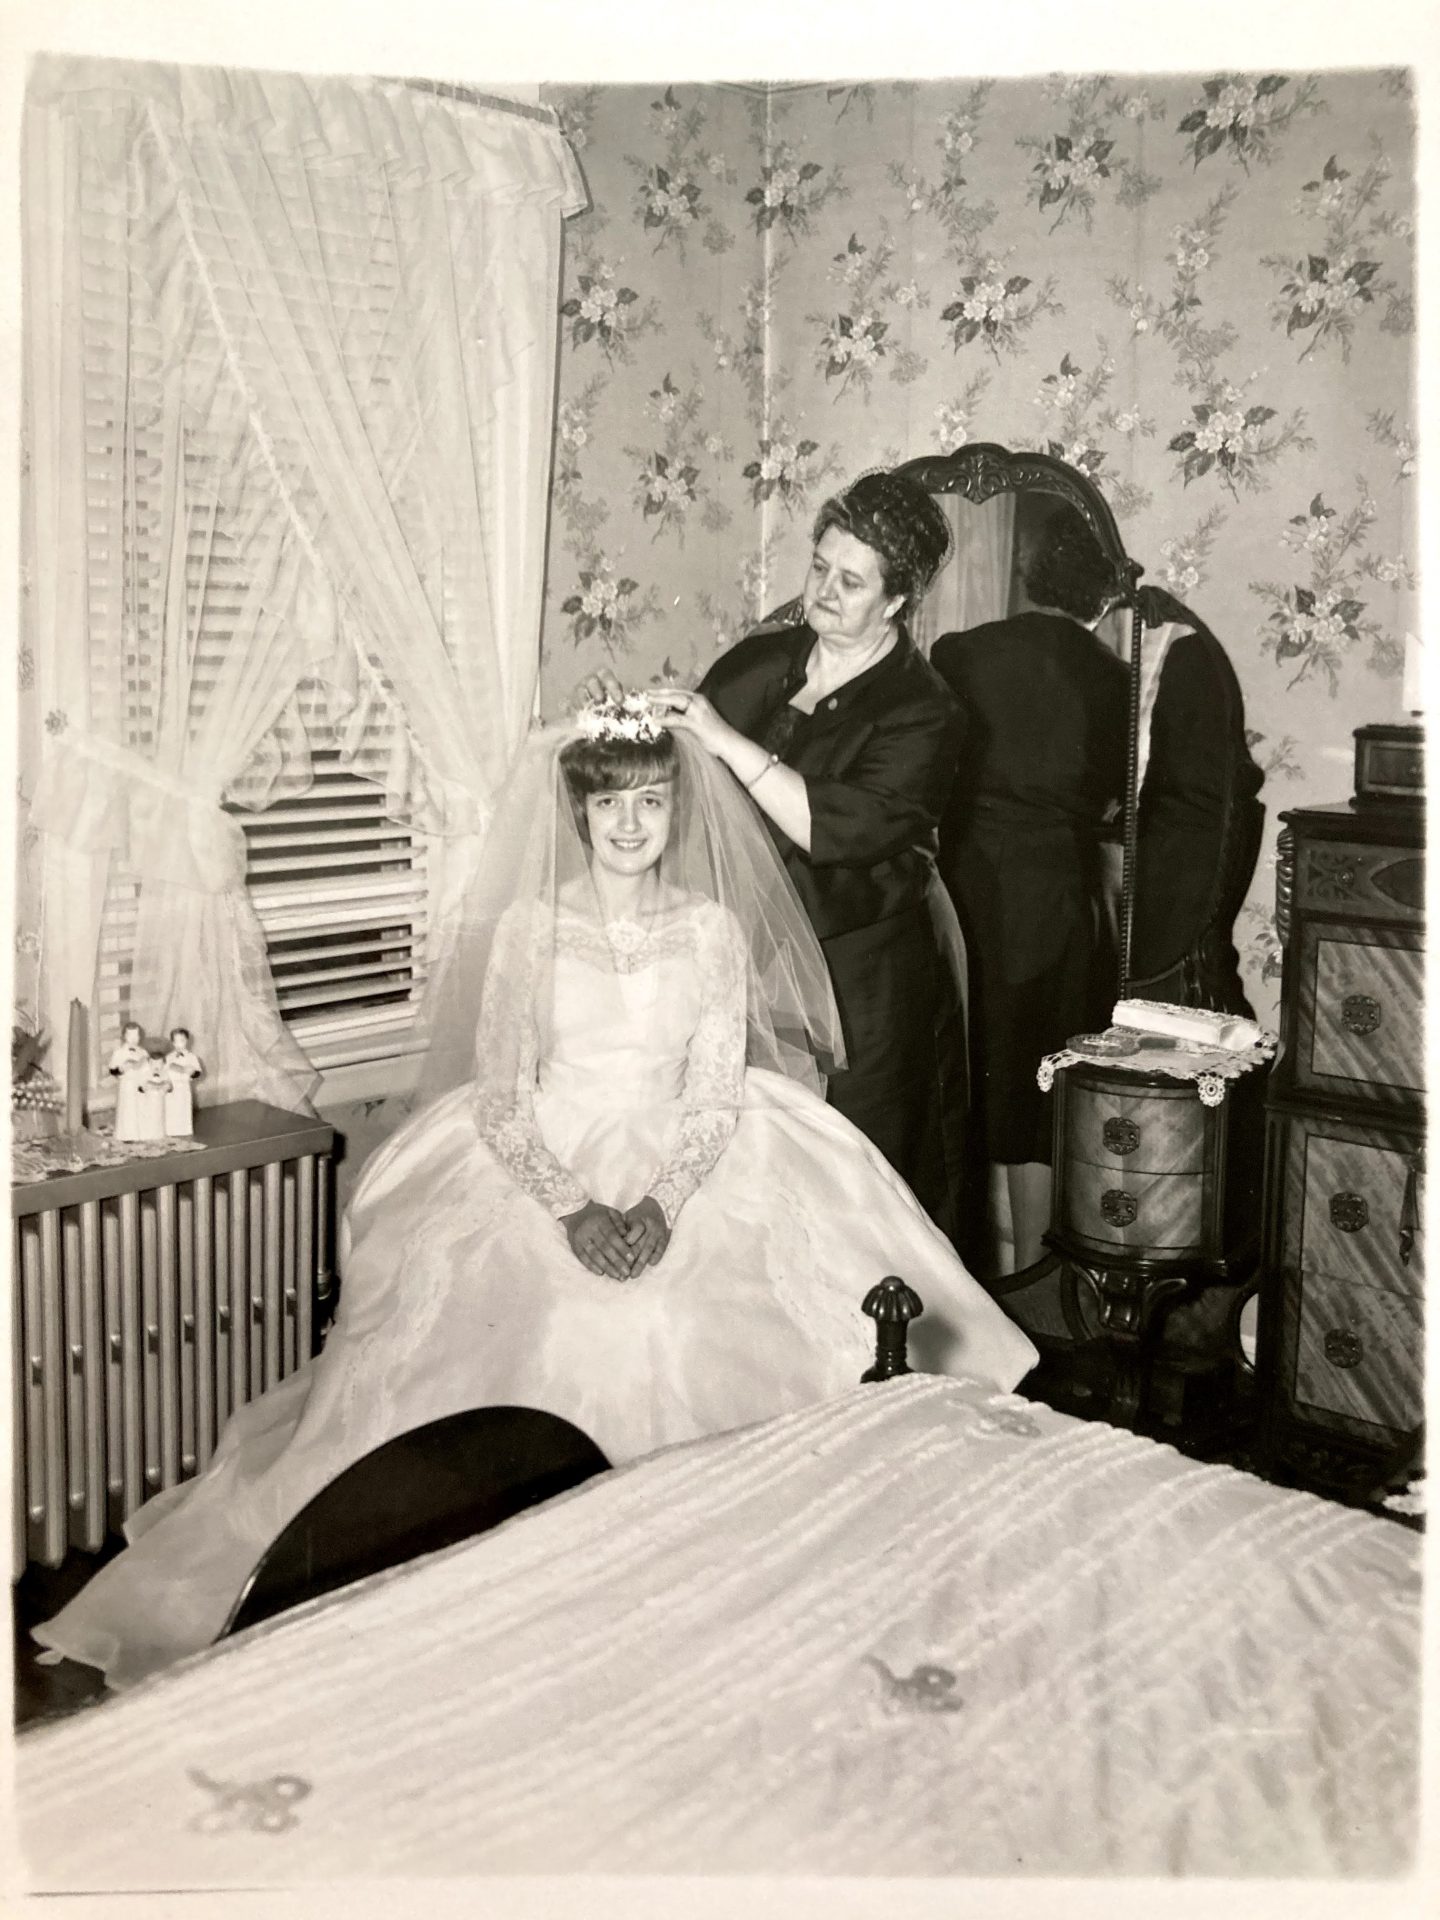 Charlotte and her mother, Helen Karolczak, on her wedding day.